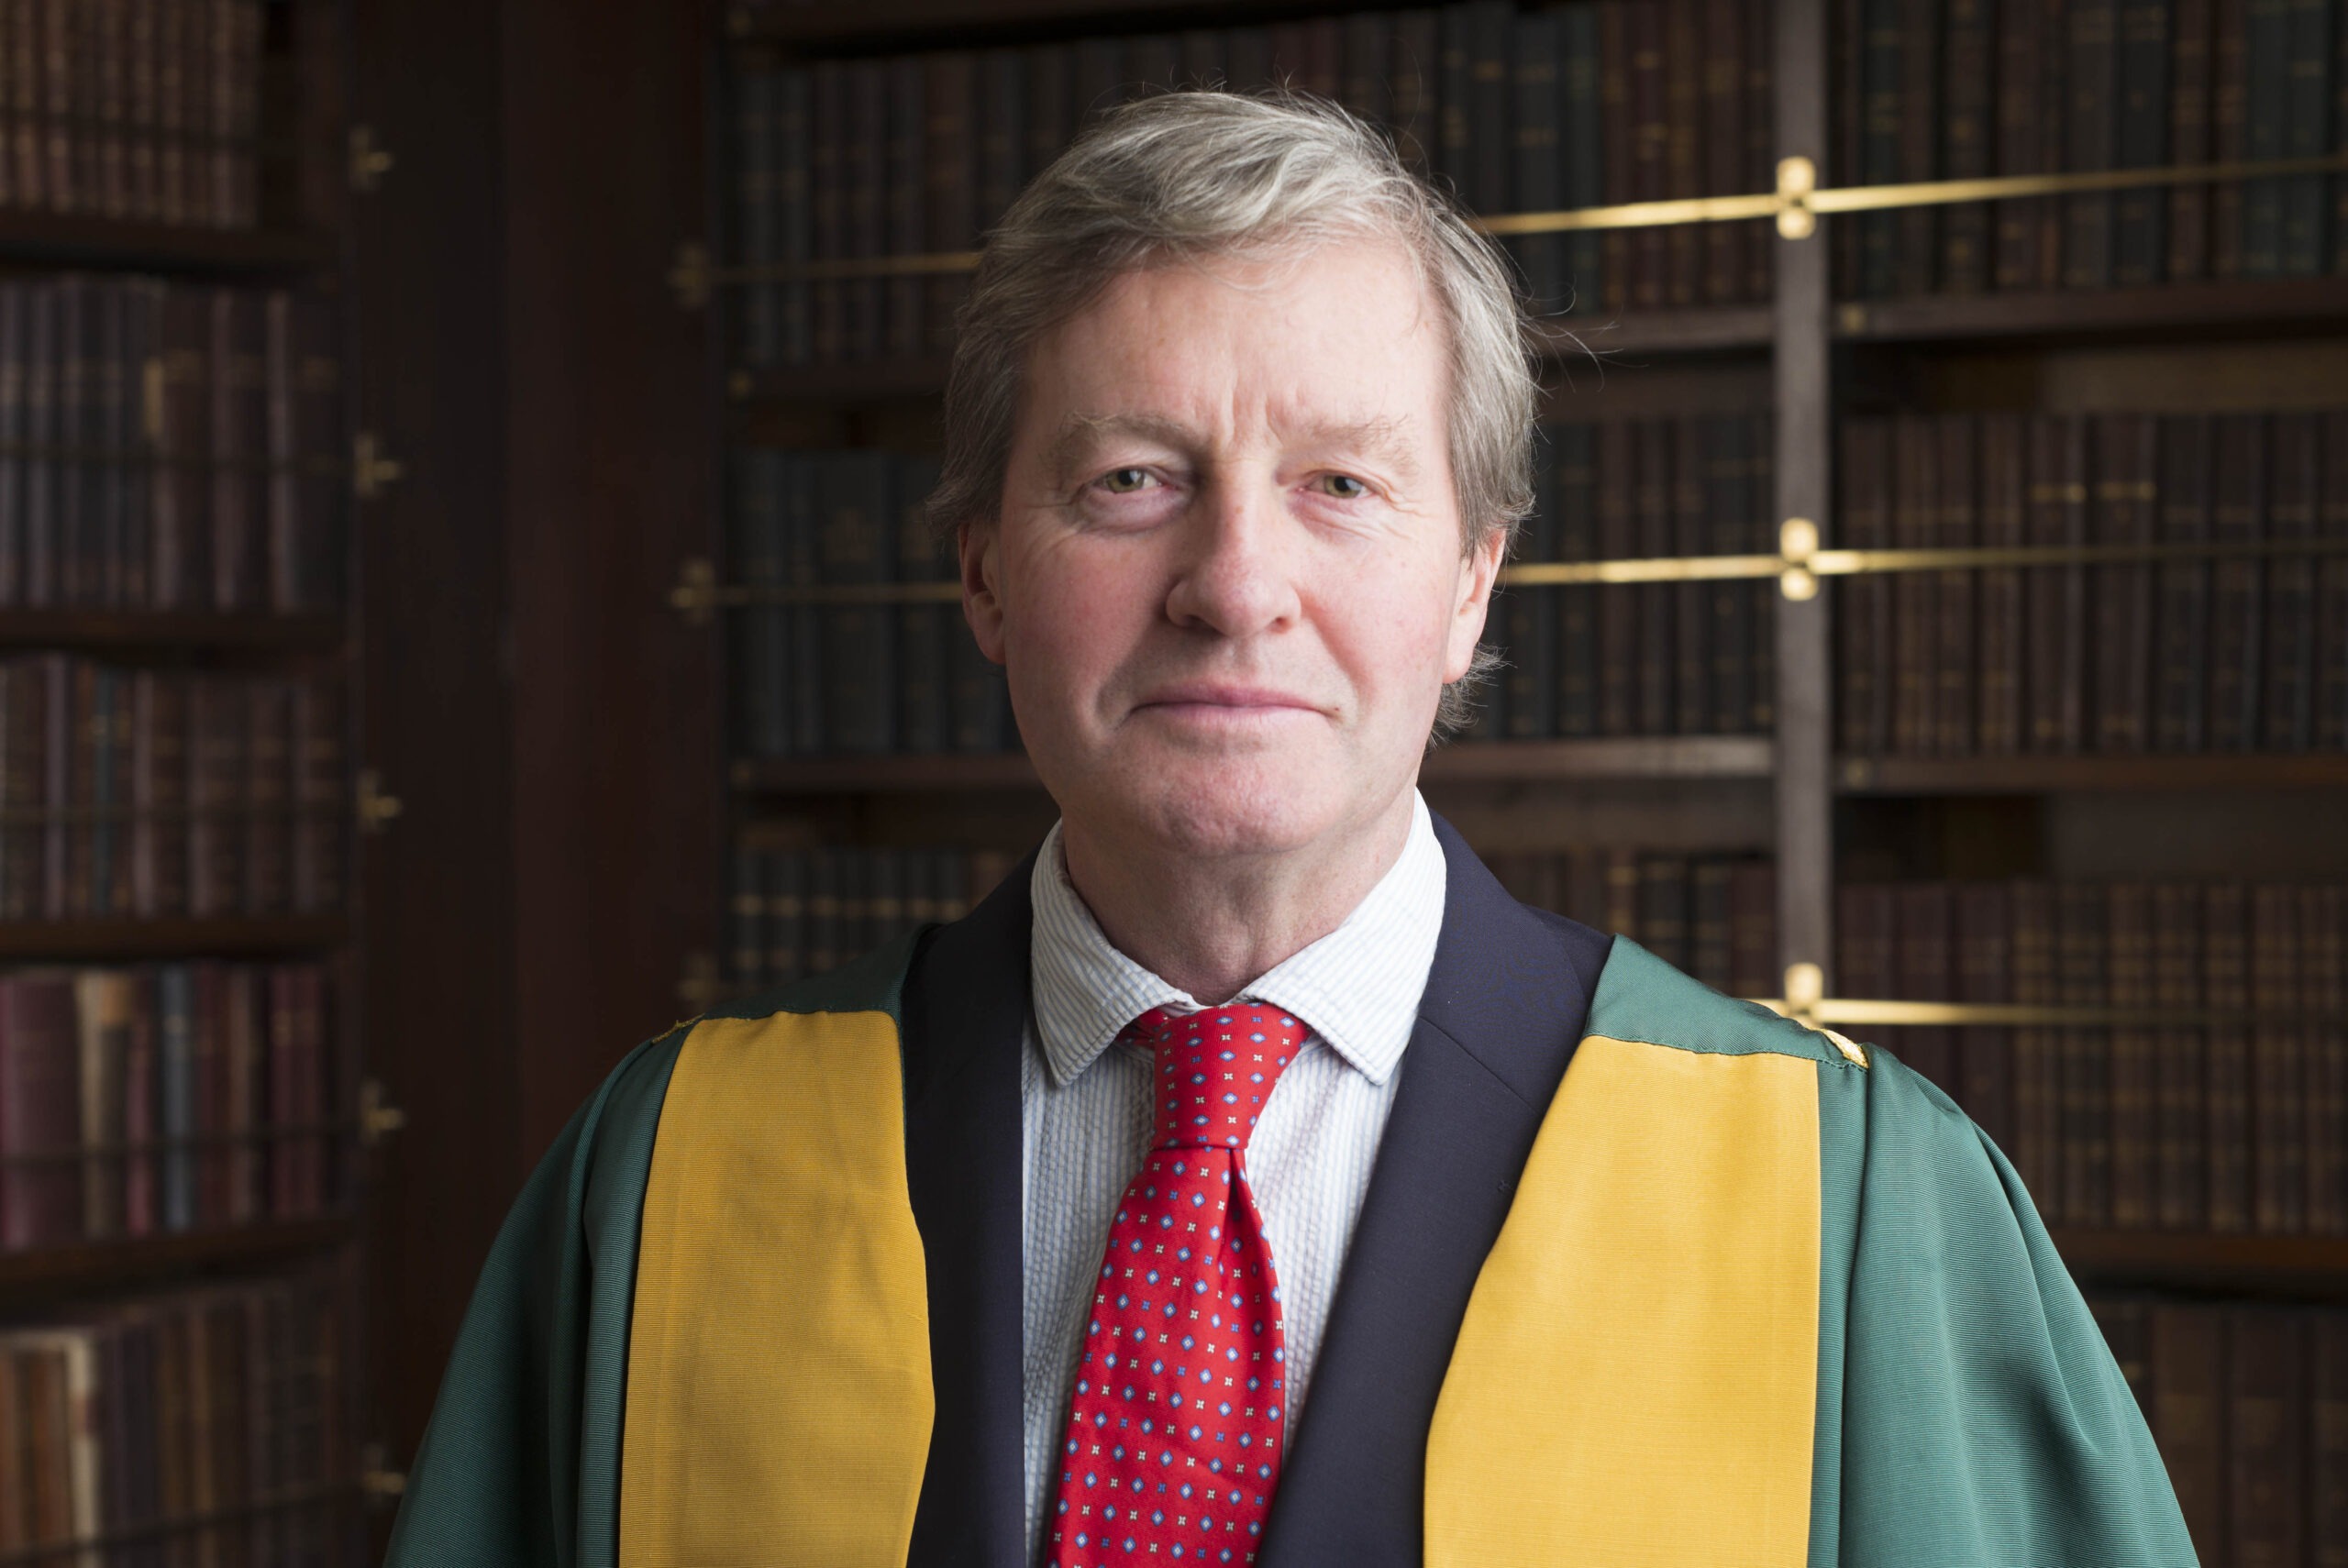 Royal Irish Academy elects Pat Guiry as President